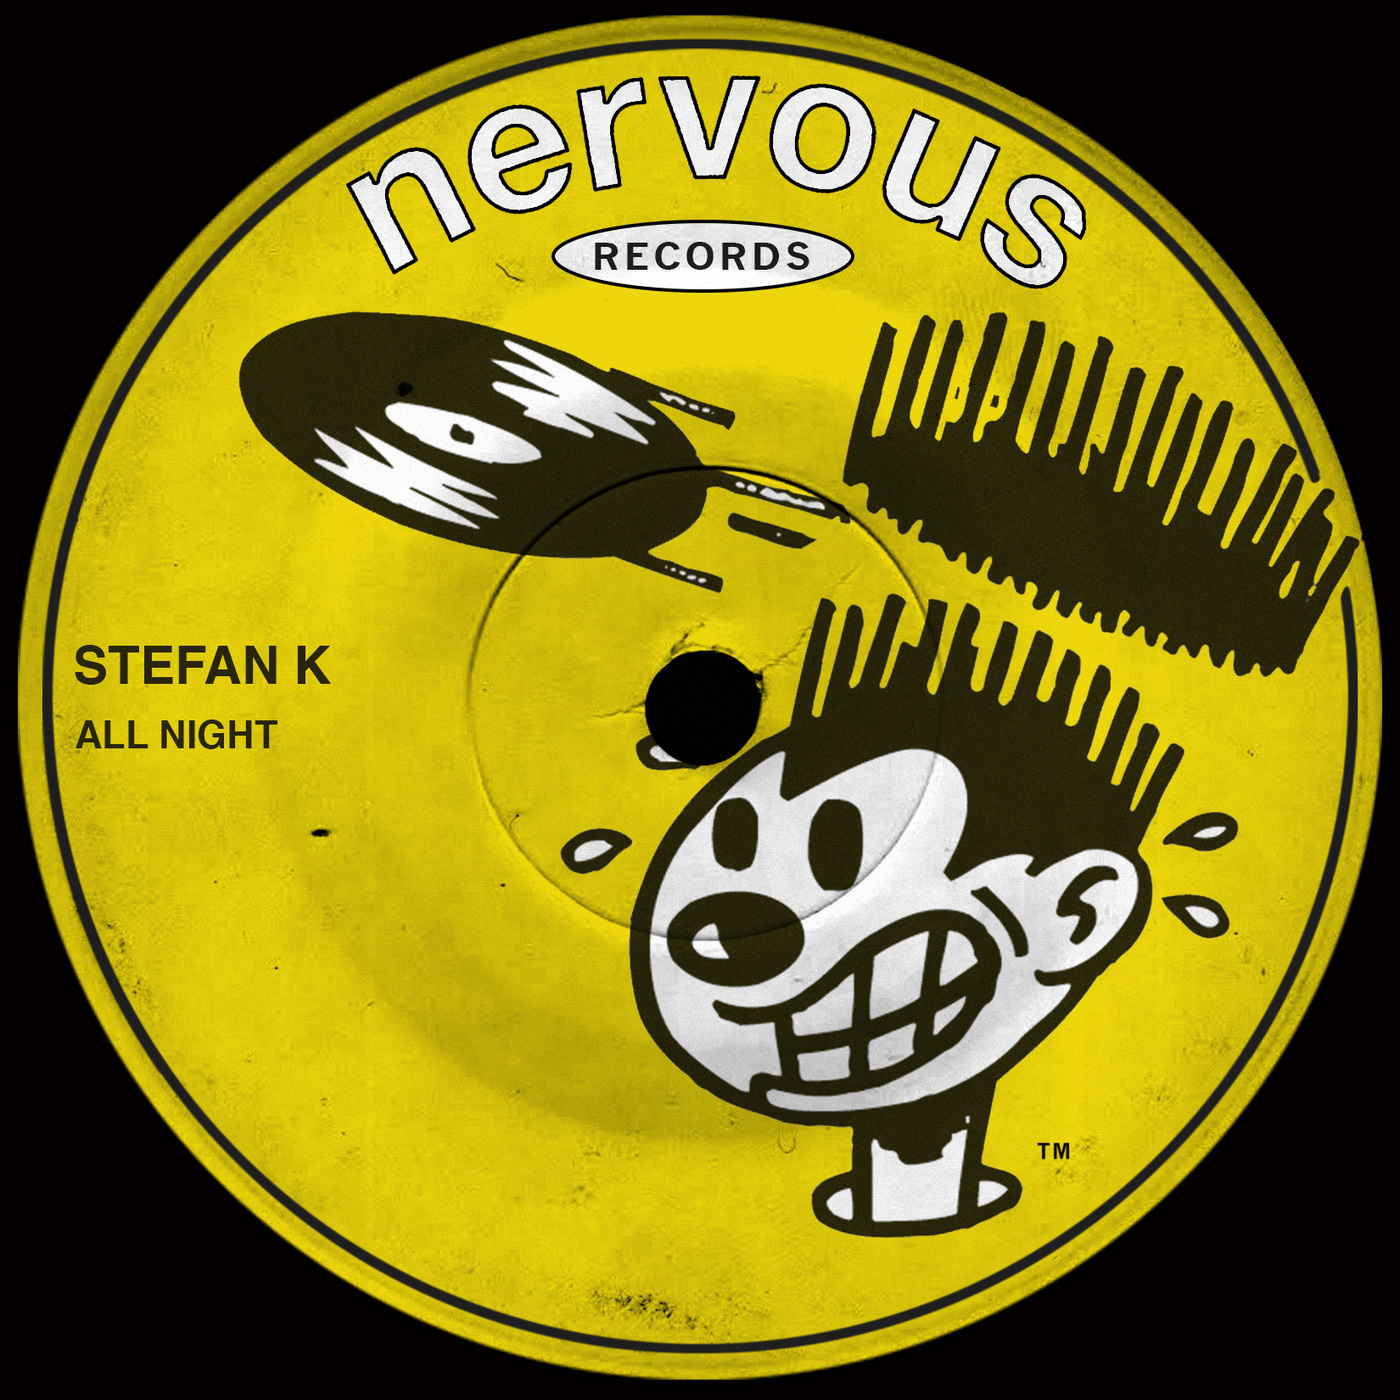 Stefan K - All Night / Nervous Records